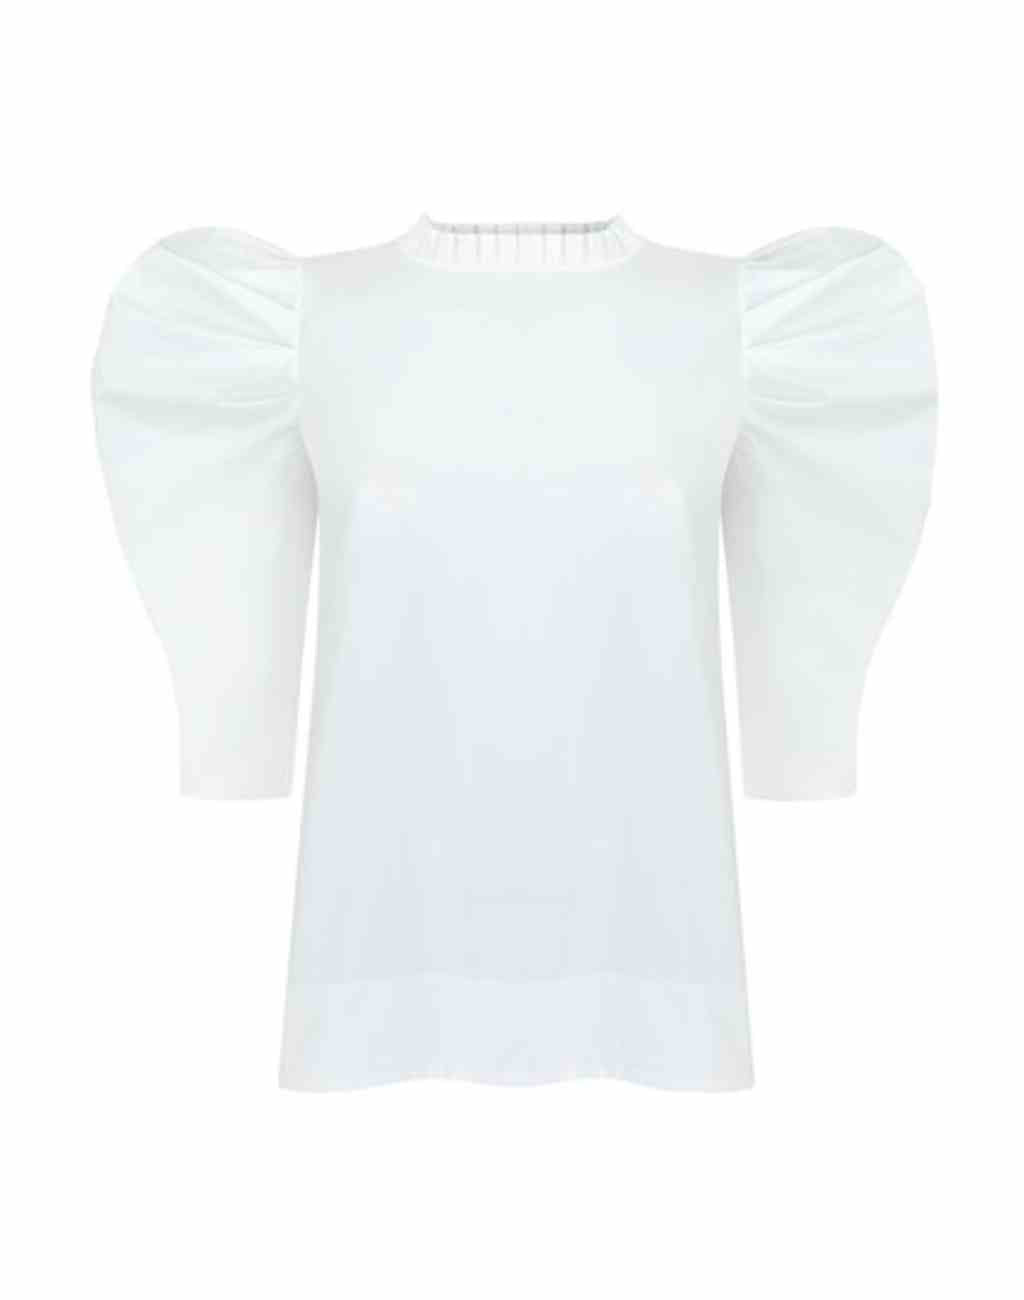 Classic White Poplin Irina Shirt | Ruffled Collar with Back Tie | Puffed Sleeves